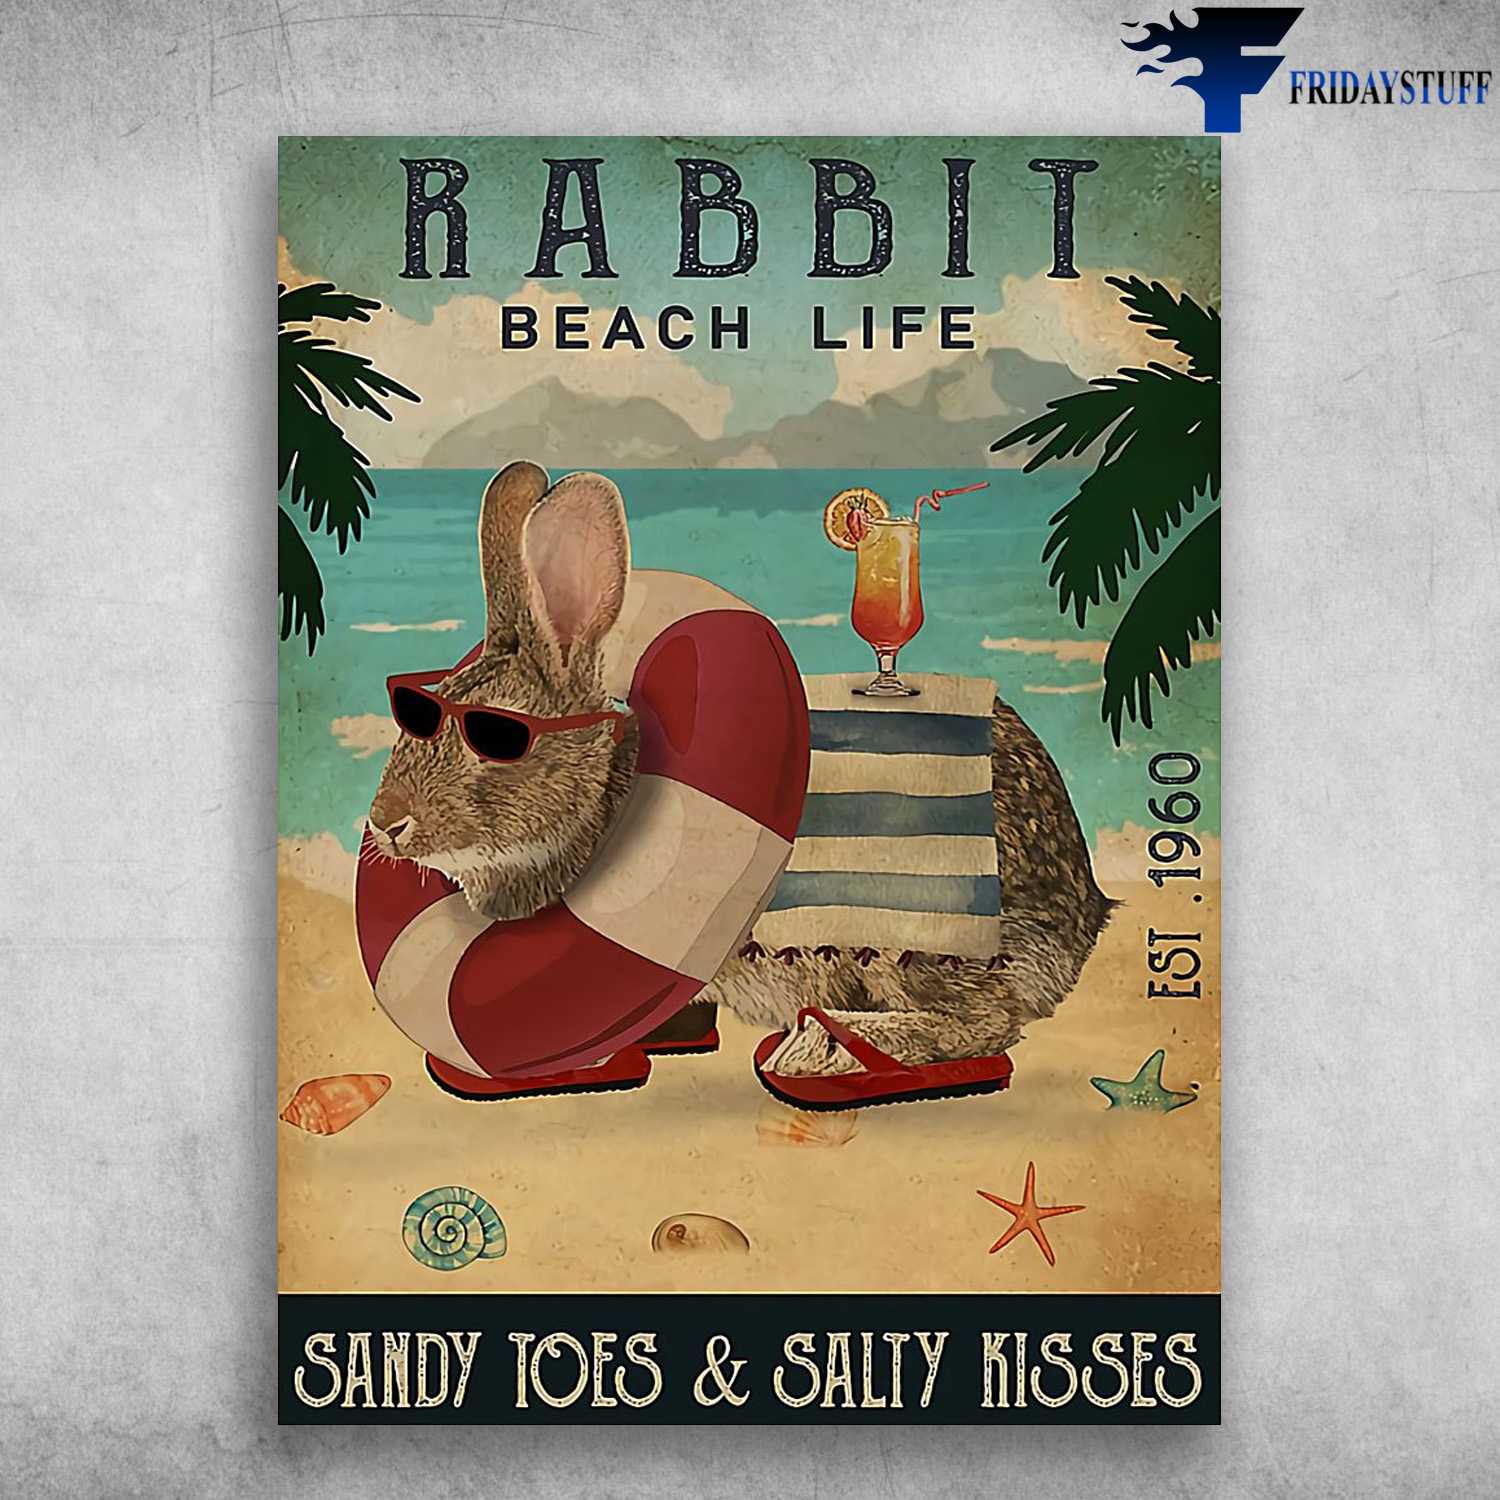 Bunny On The Beach - Rabbit Beach Life, Sandy Toes And Saity Kisses, Drink And Beach